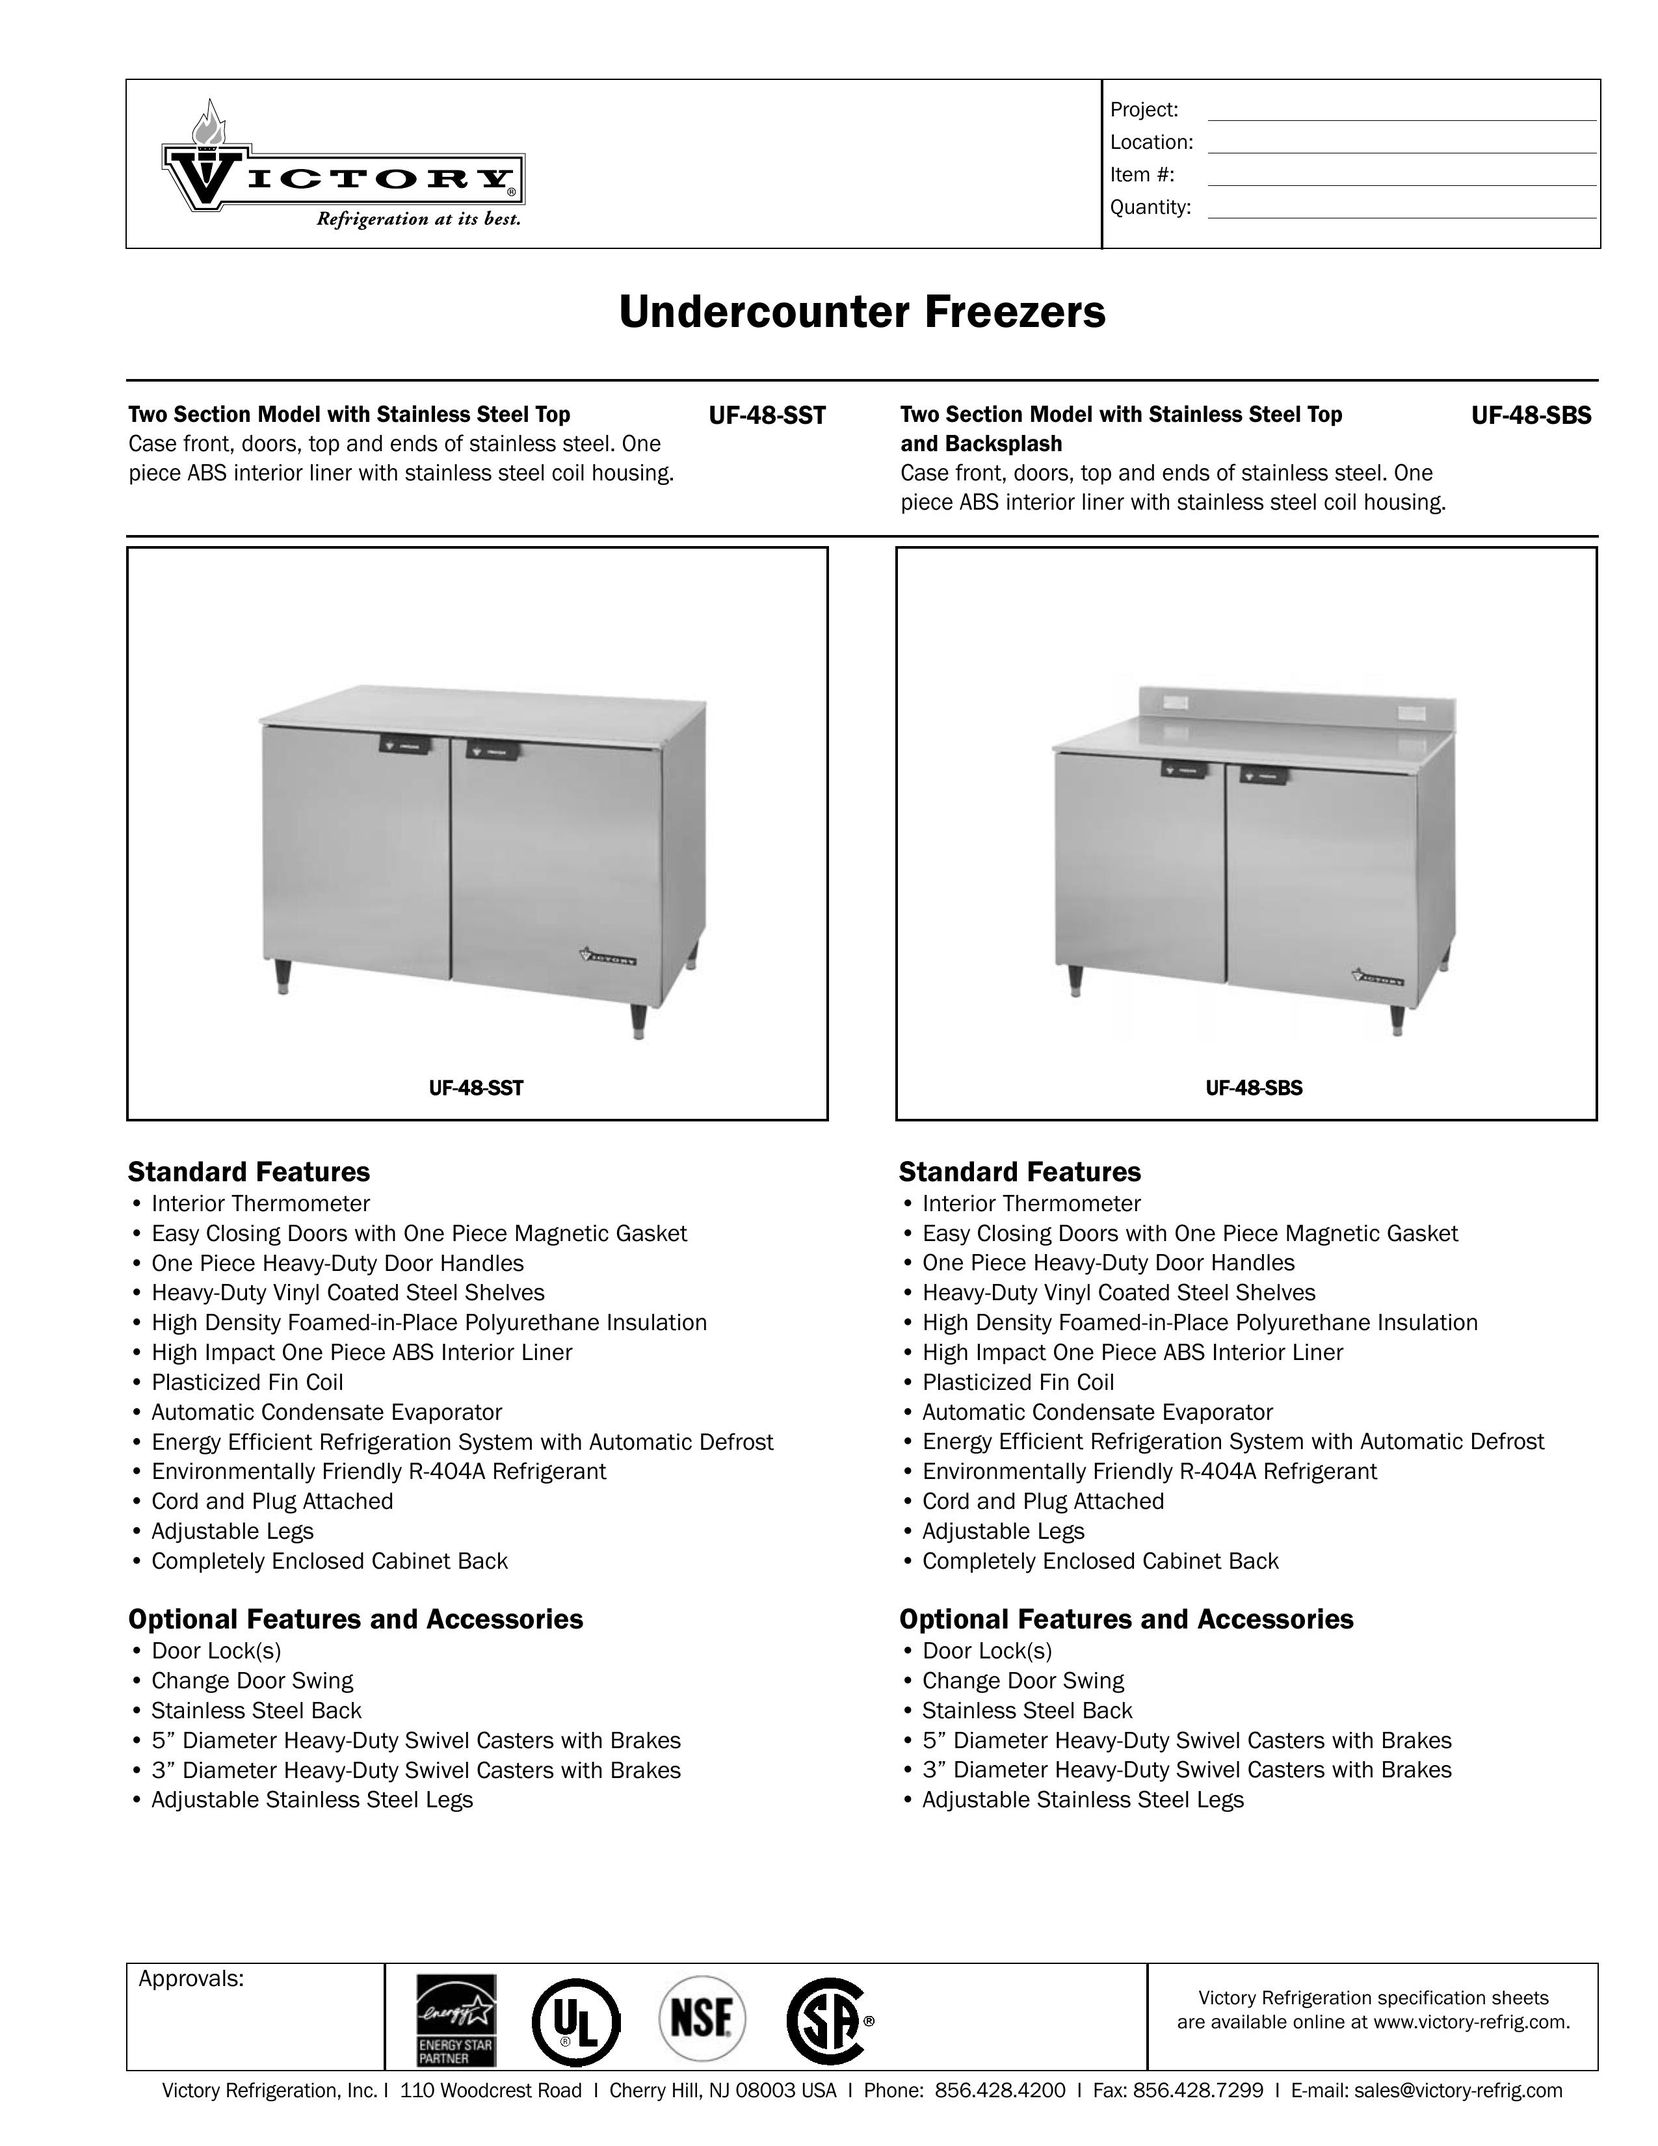 Victory Refrigeration UF-448-SSBS Freezer User Manual